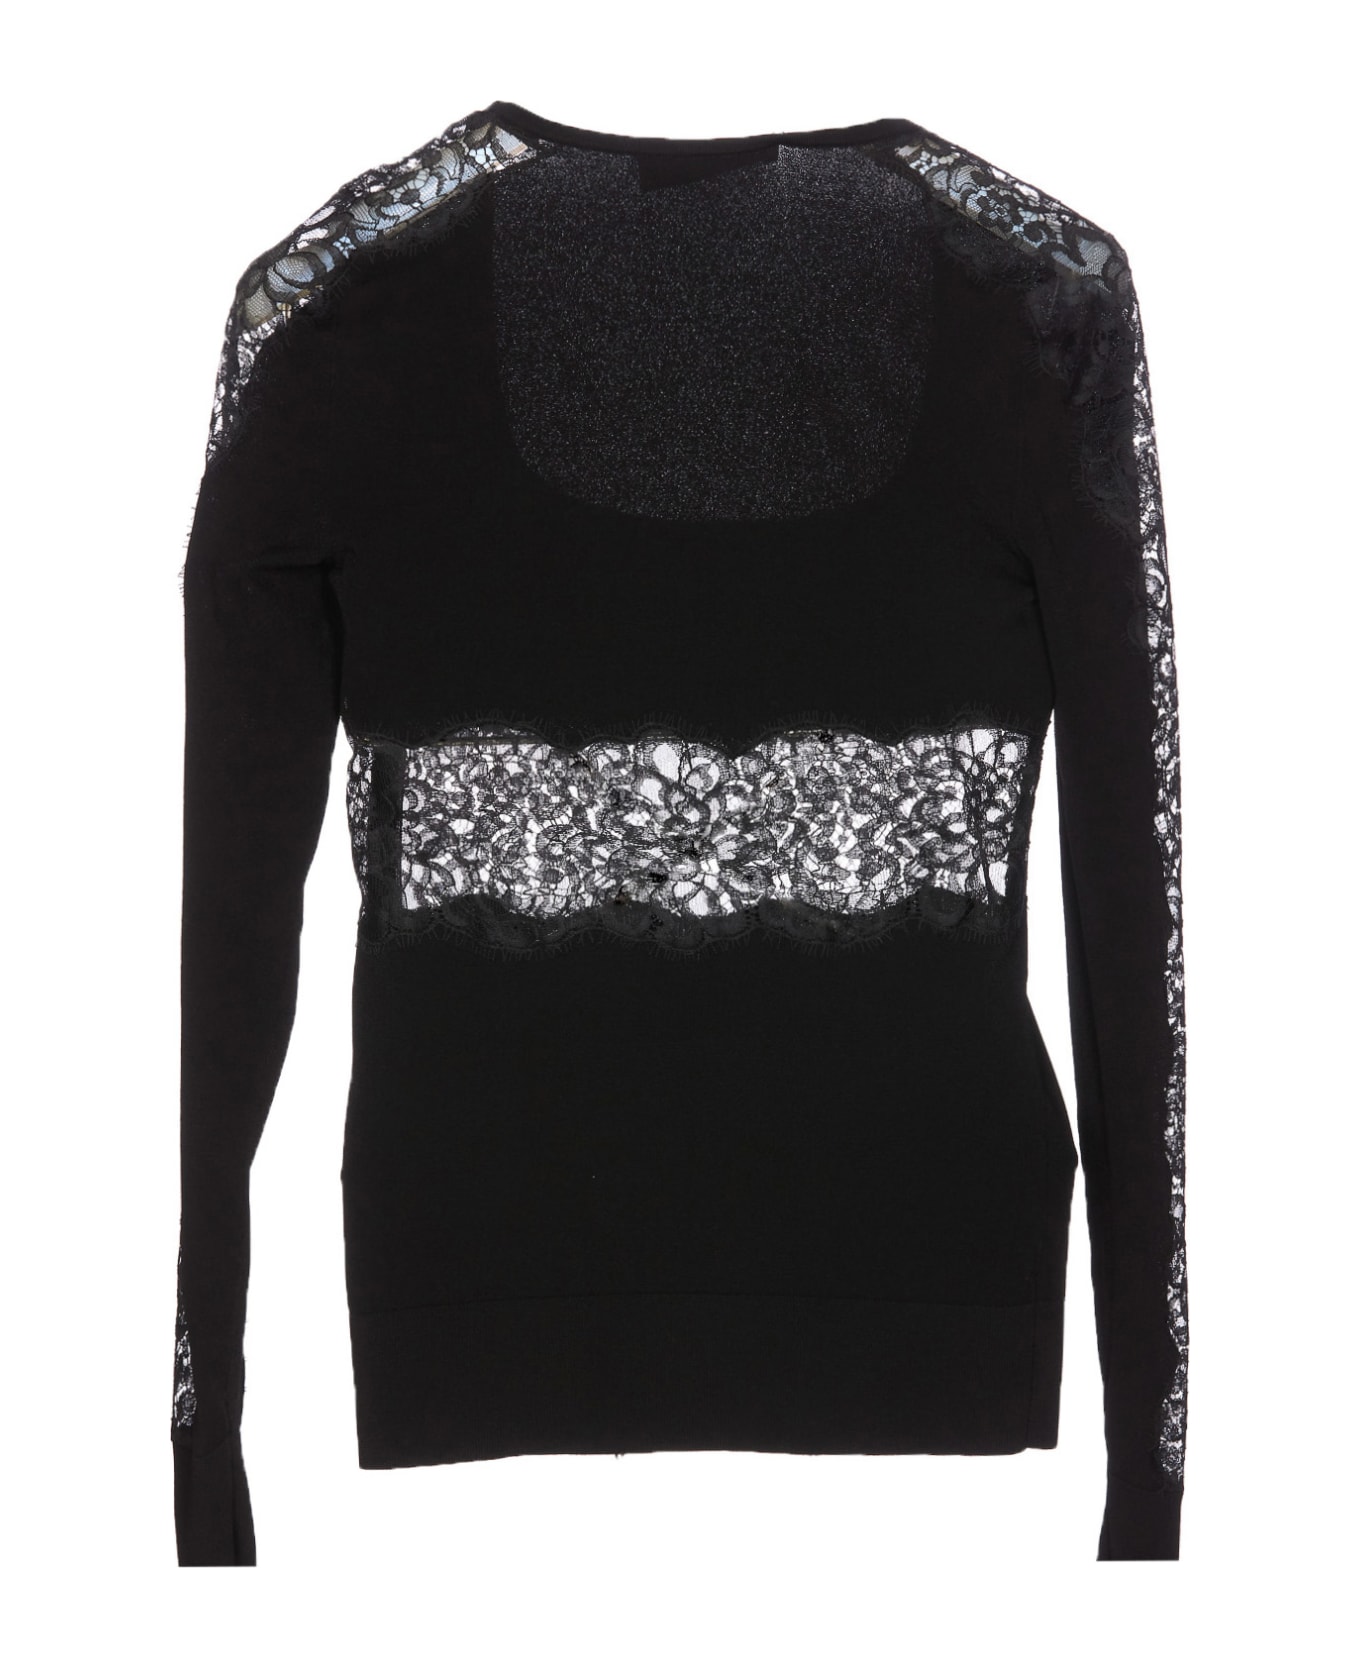 Dolce & Gabbana Lace Pullover - Black